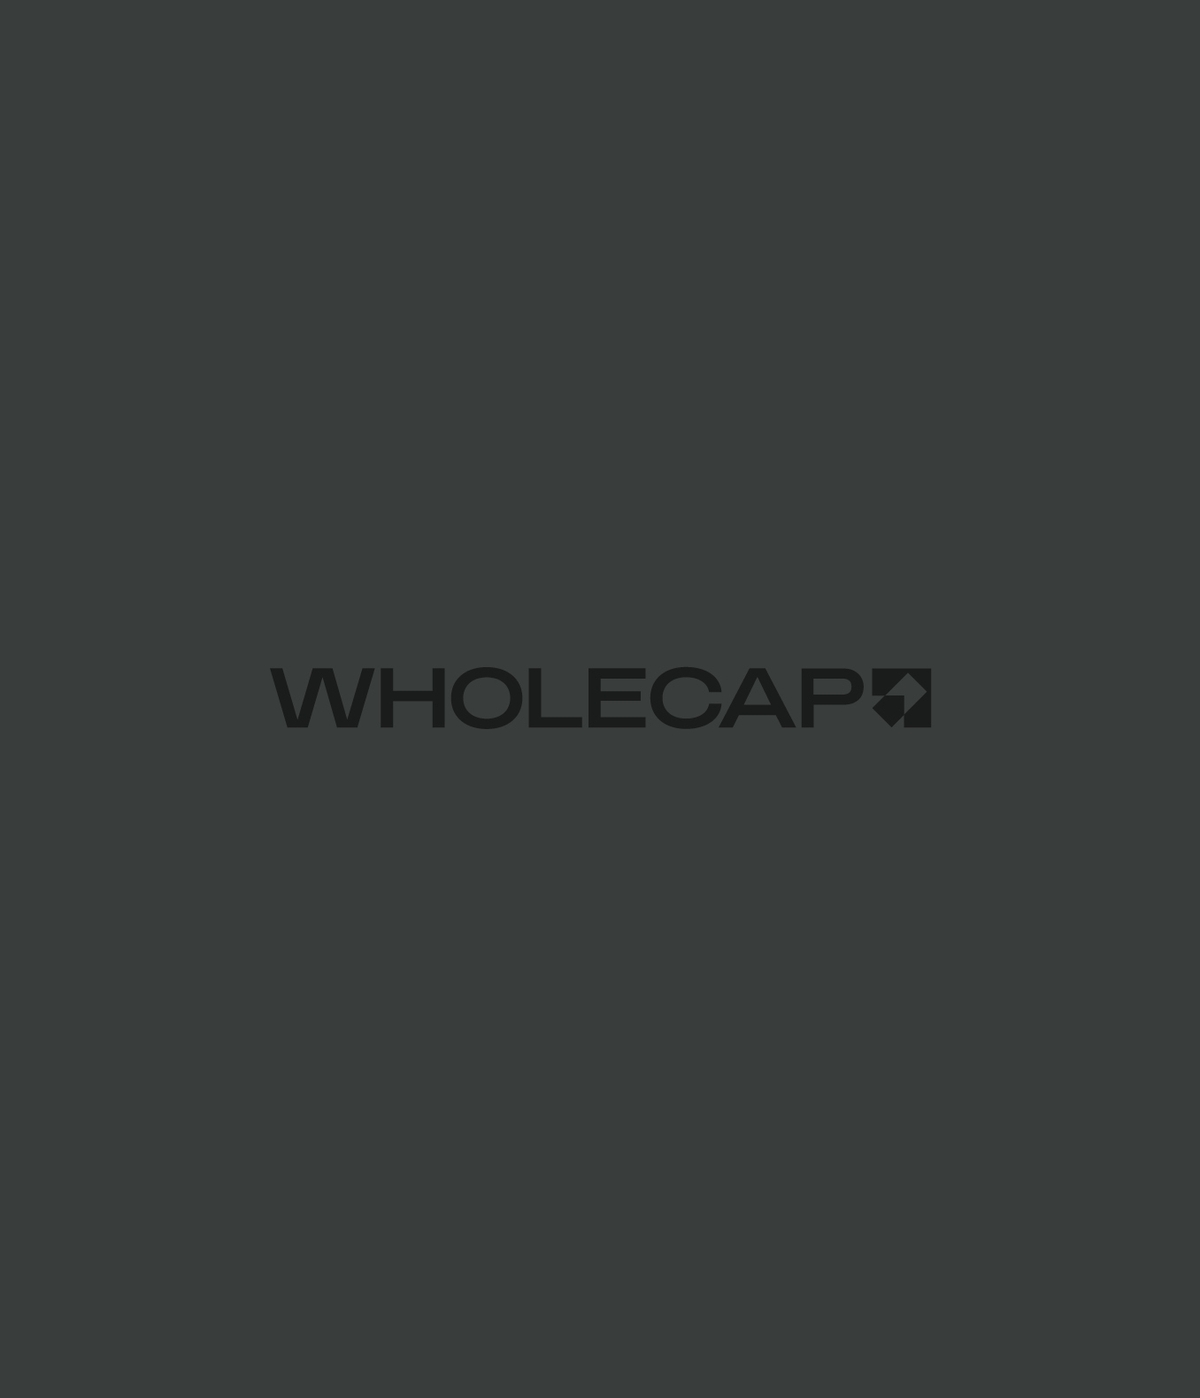 Wholecap - Brand strategy / Brand Direction - Logomark | Atollon - a design company